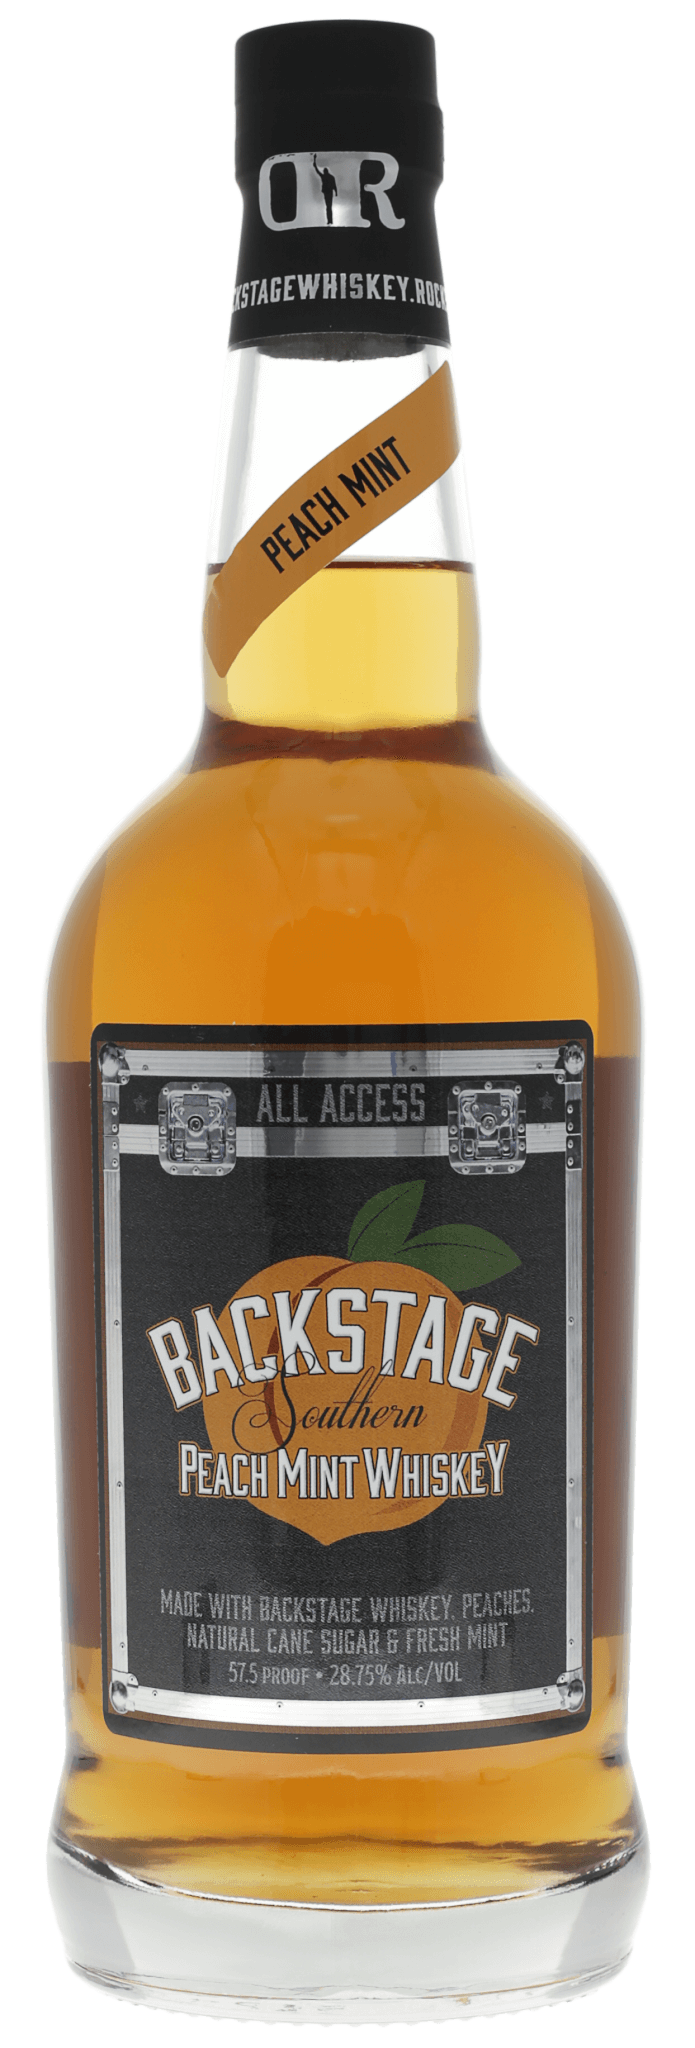 Darius Rucker's Backstage Peach Mint Whiskey